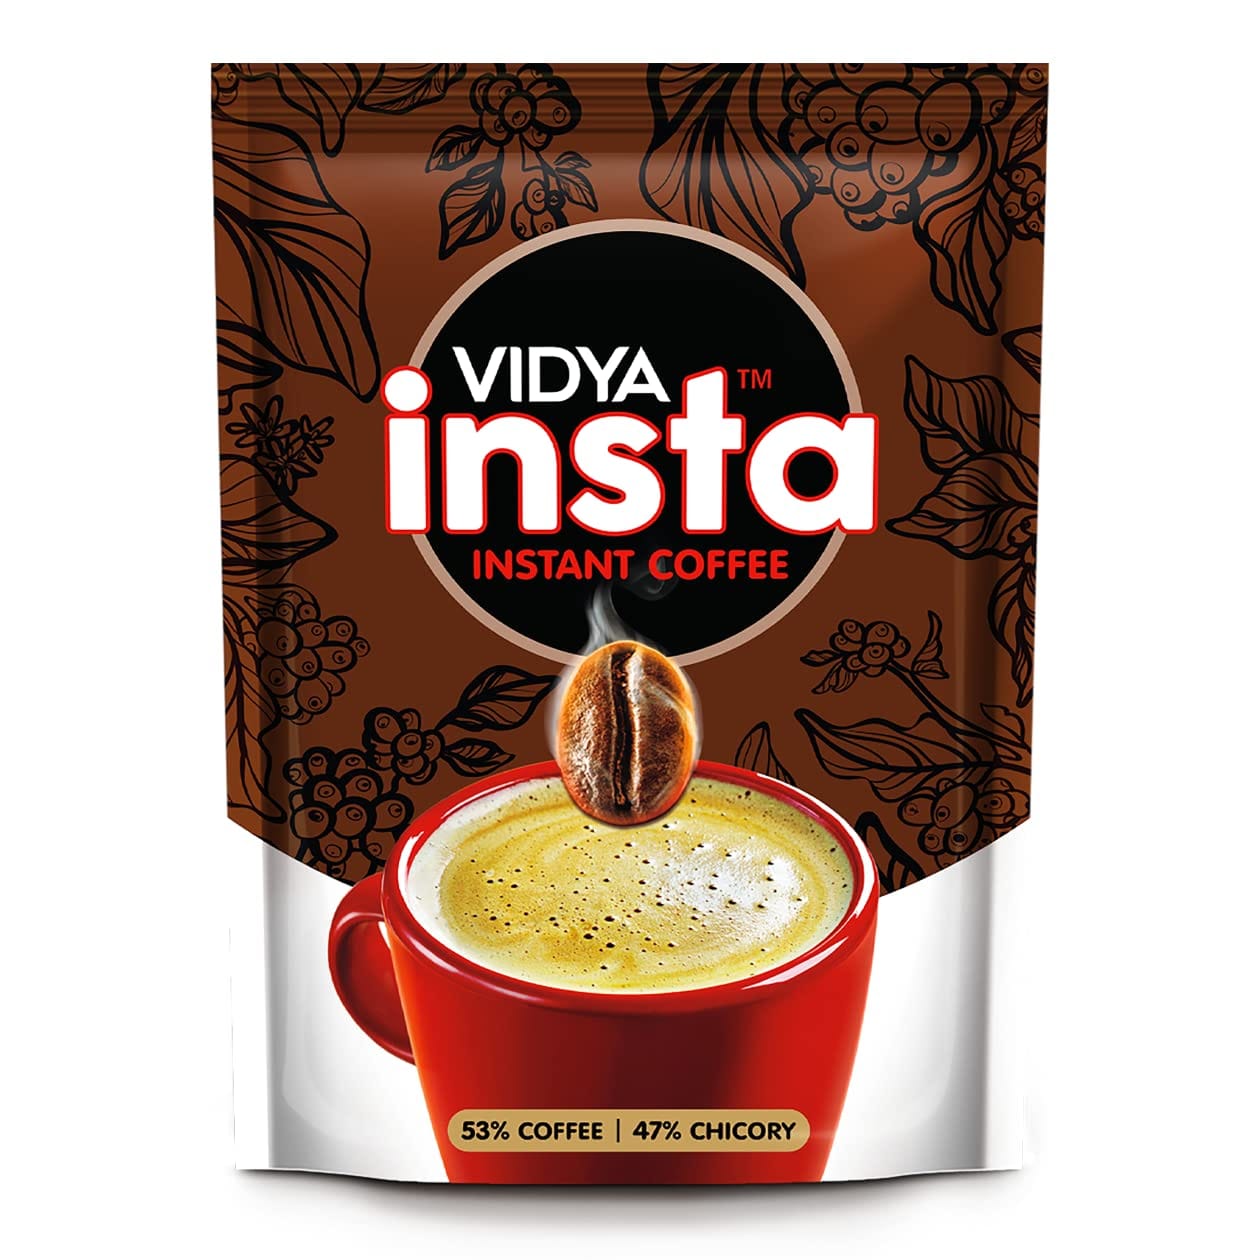 Vidya Insta 53/47, Vidya Instant Coffee